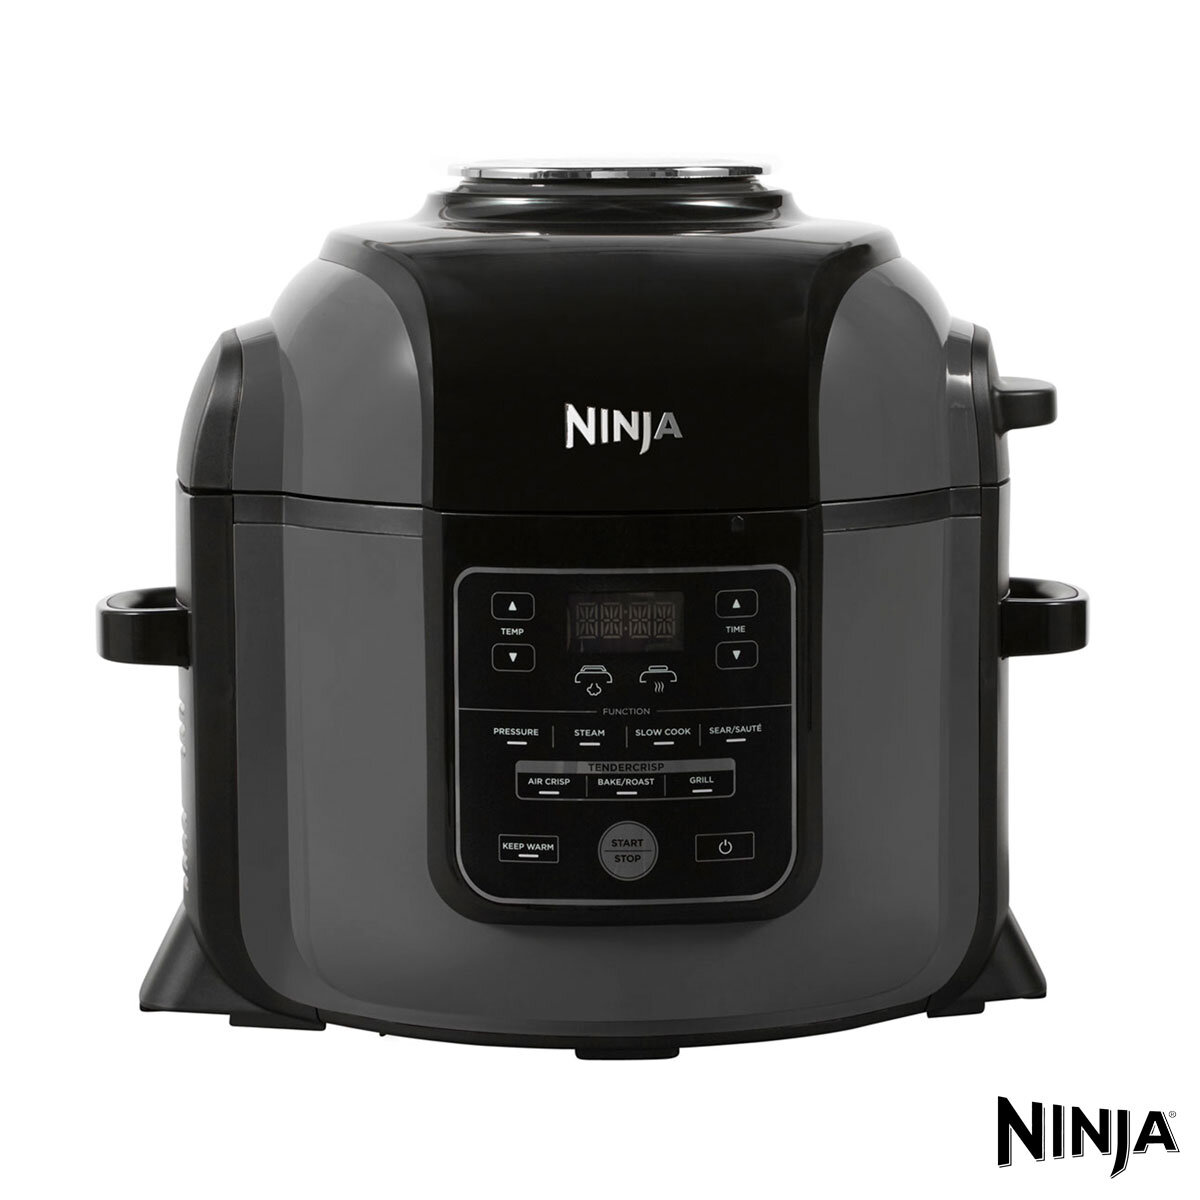 Winter Warming Chilli with the Ninja Foodi MAX 9-in-1 Multi-Cooker 7.5L